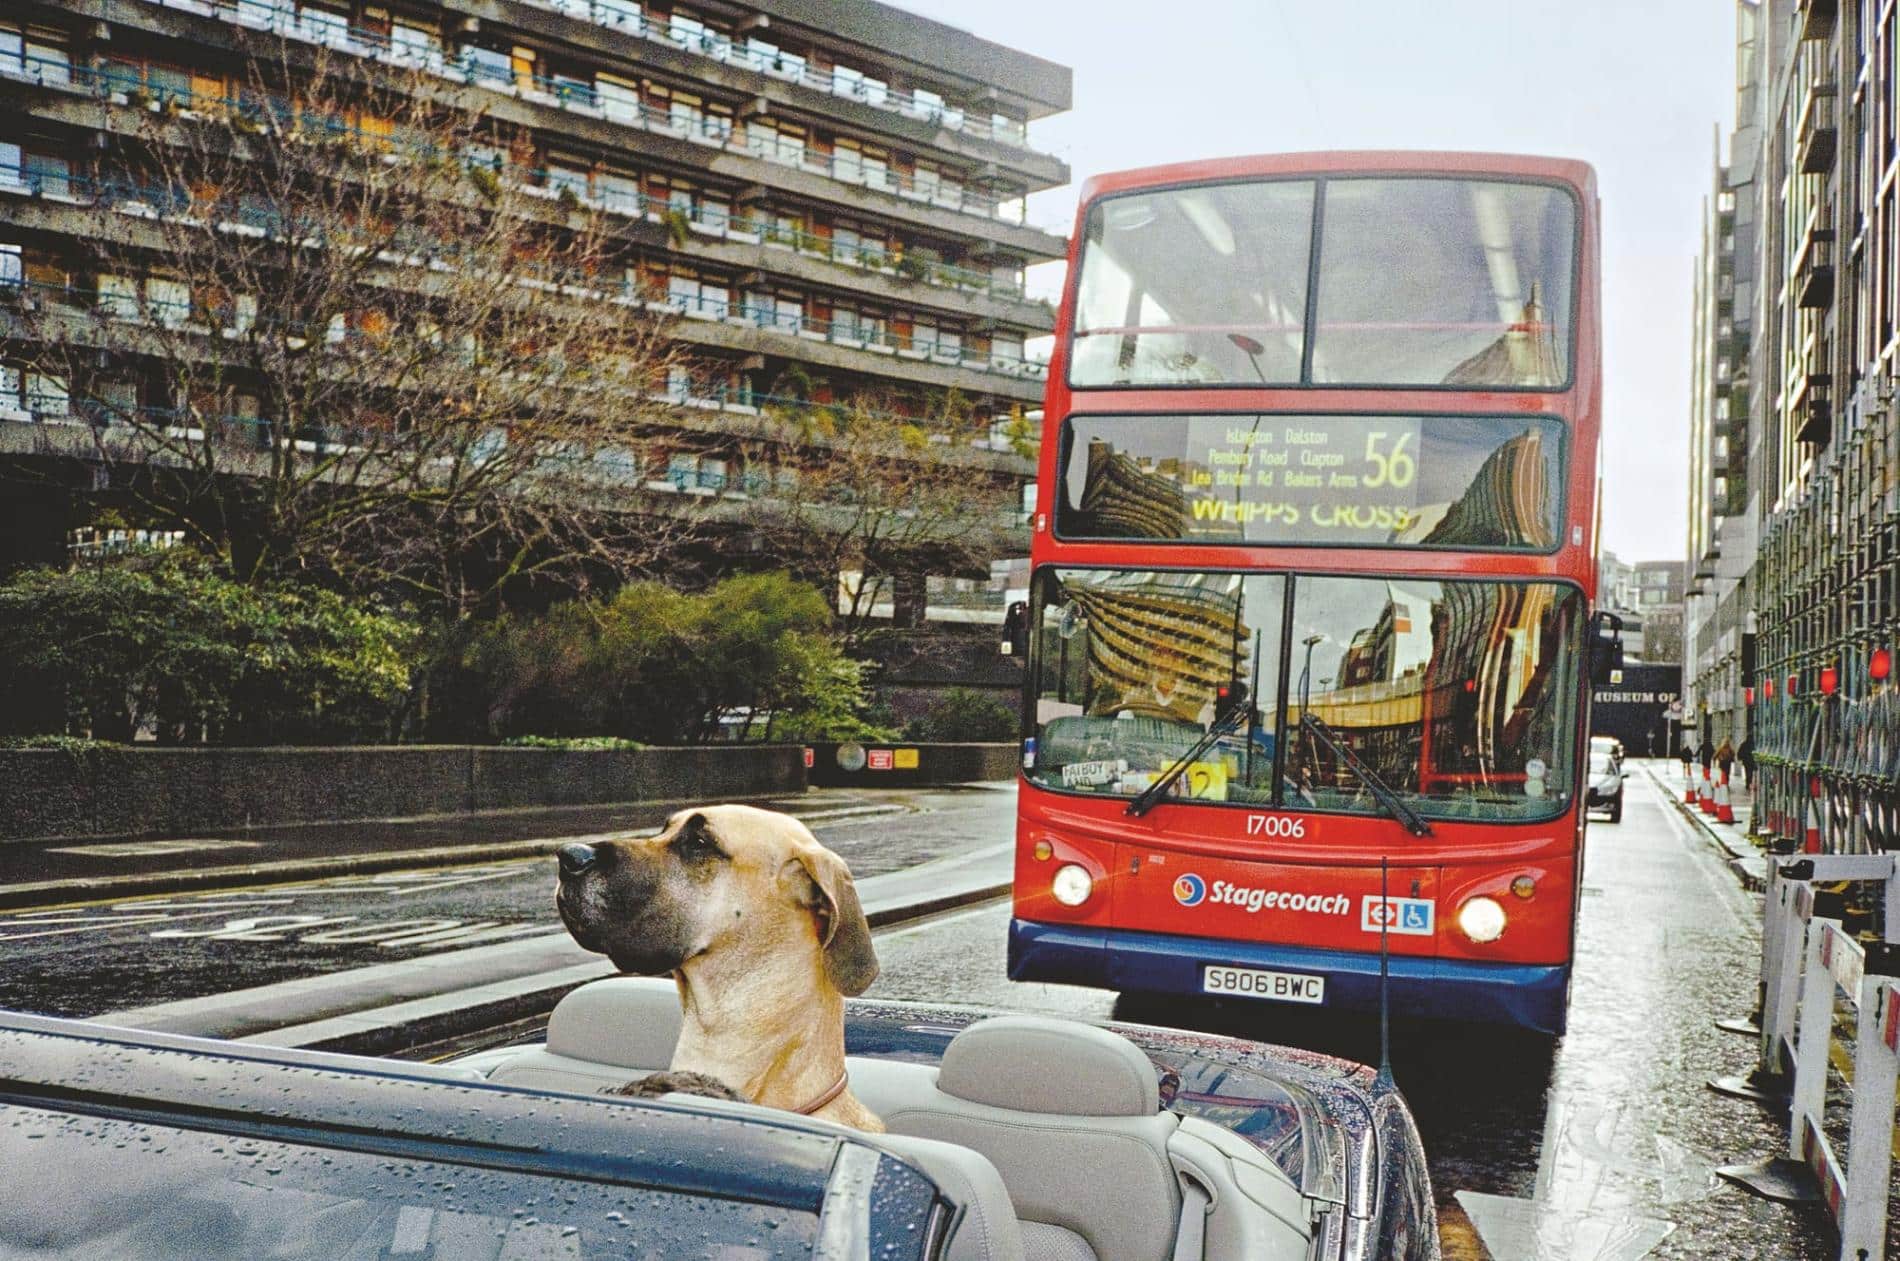 Matt Stuart fotografo callejero serendipia perro